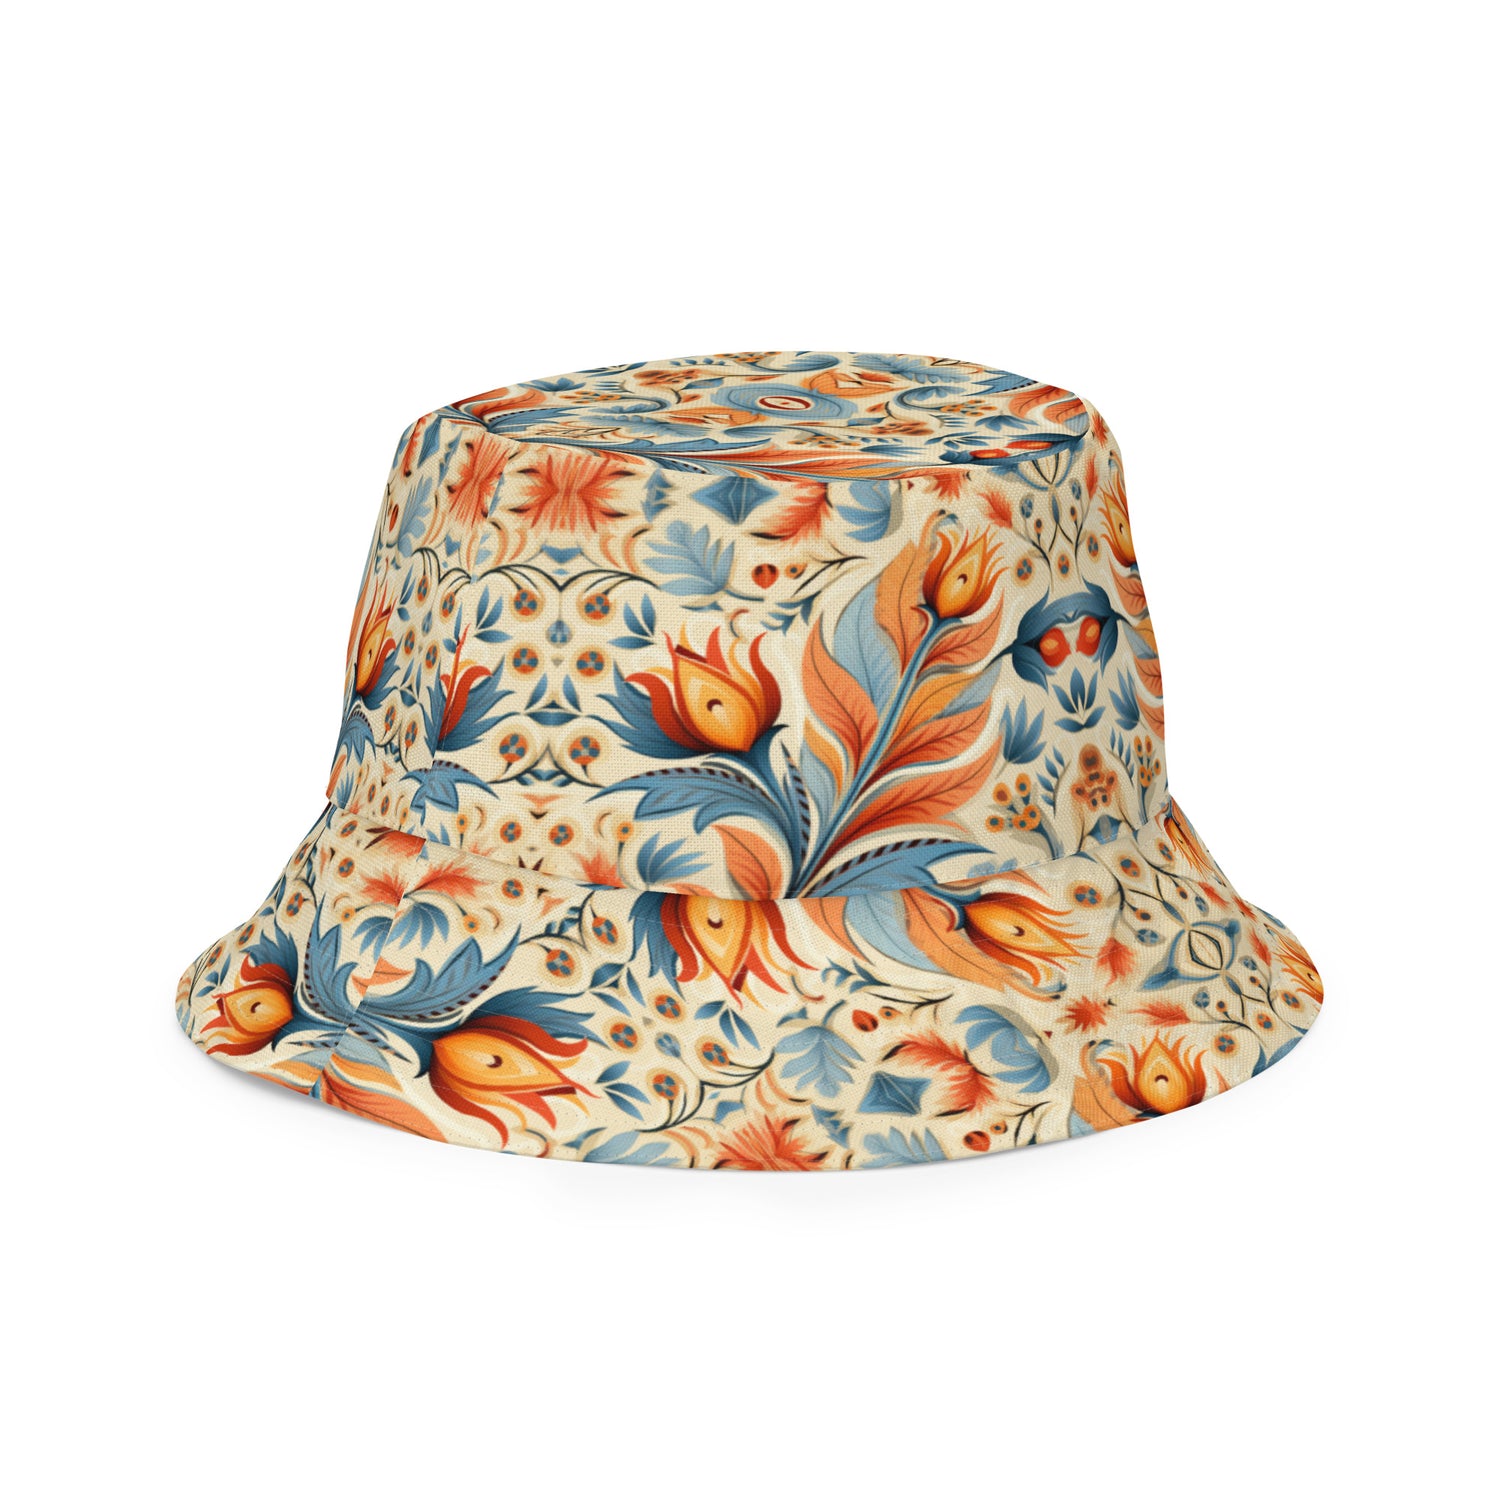 Bavarian Fall Folk Art Reversible Bucket Hat